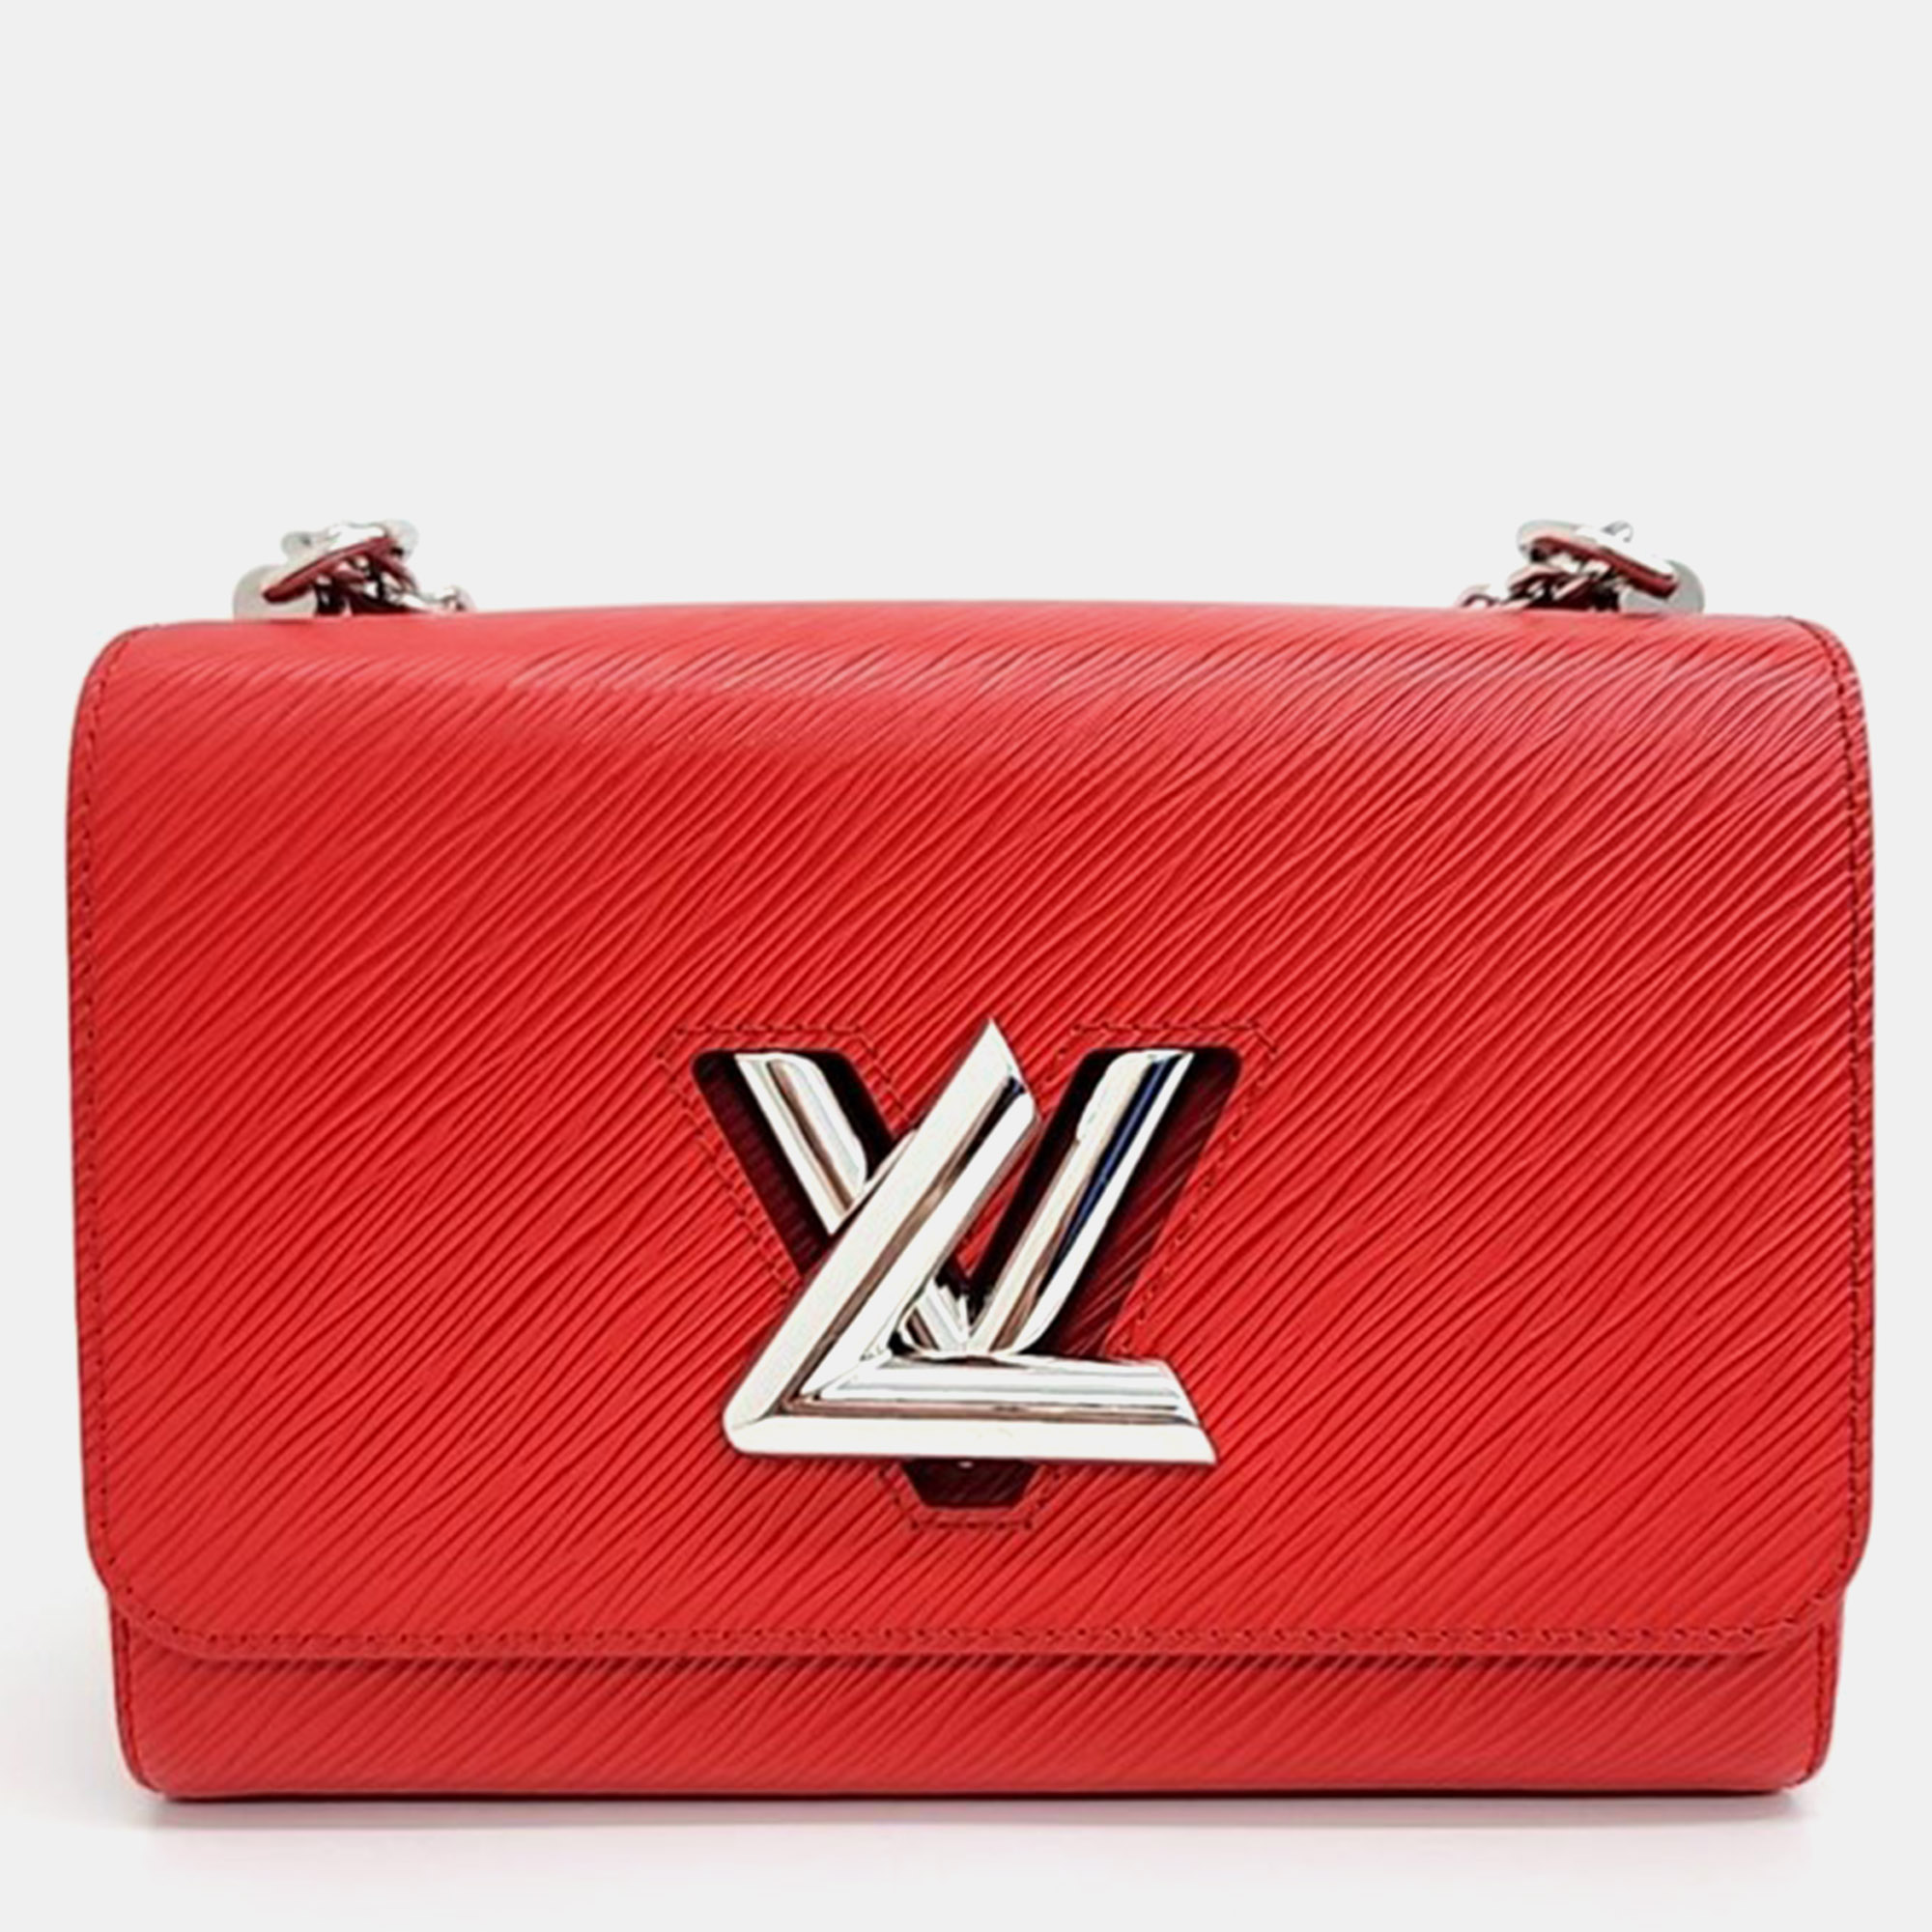 Pre-owned Louis Vuitton Epi Twist Mm Handbag In Red